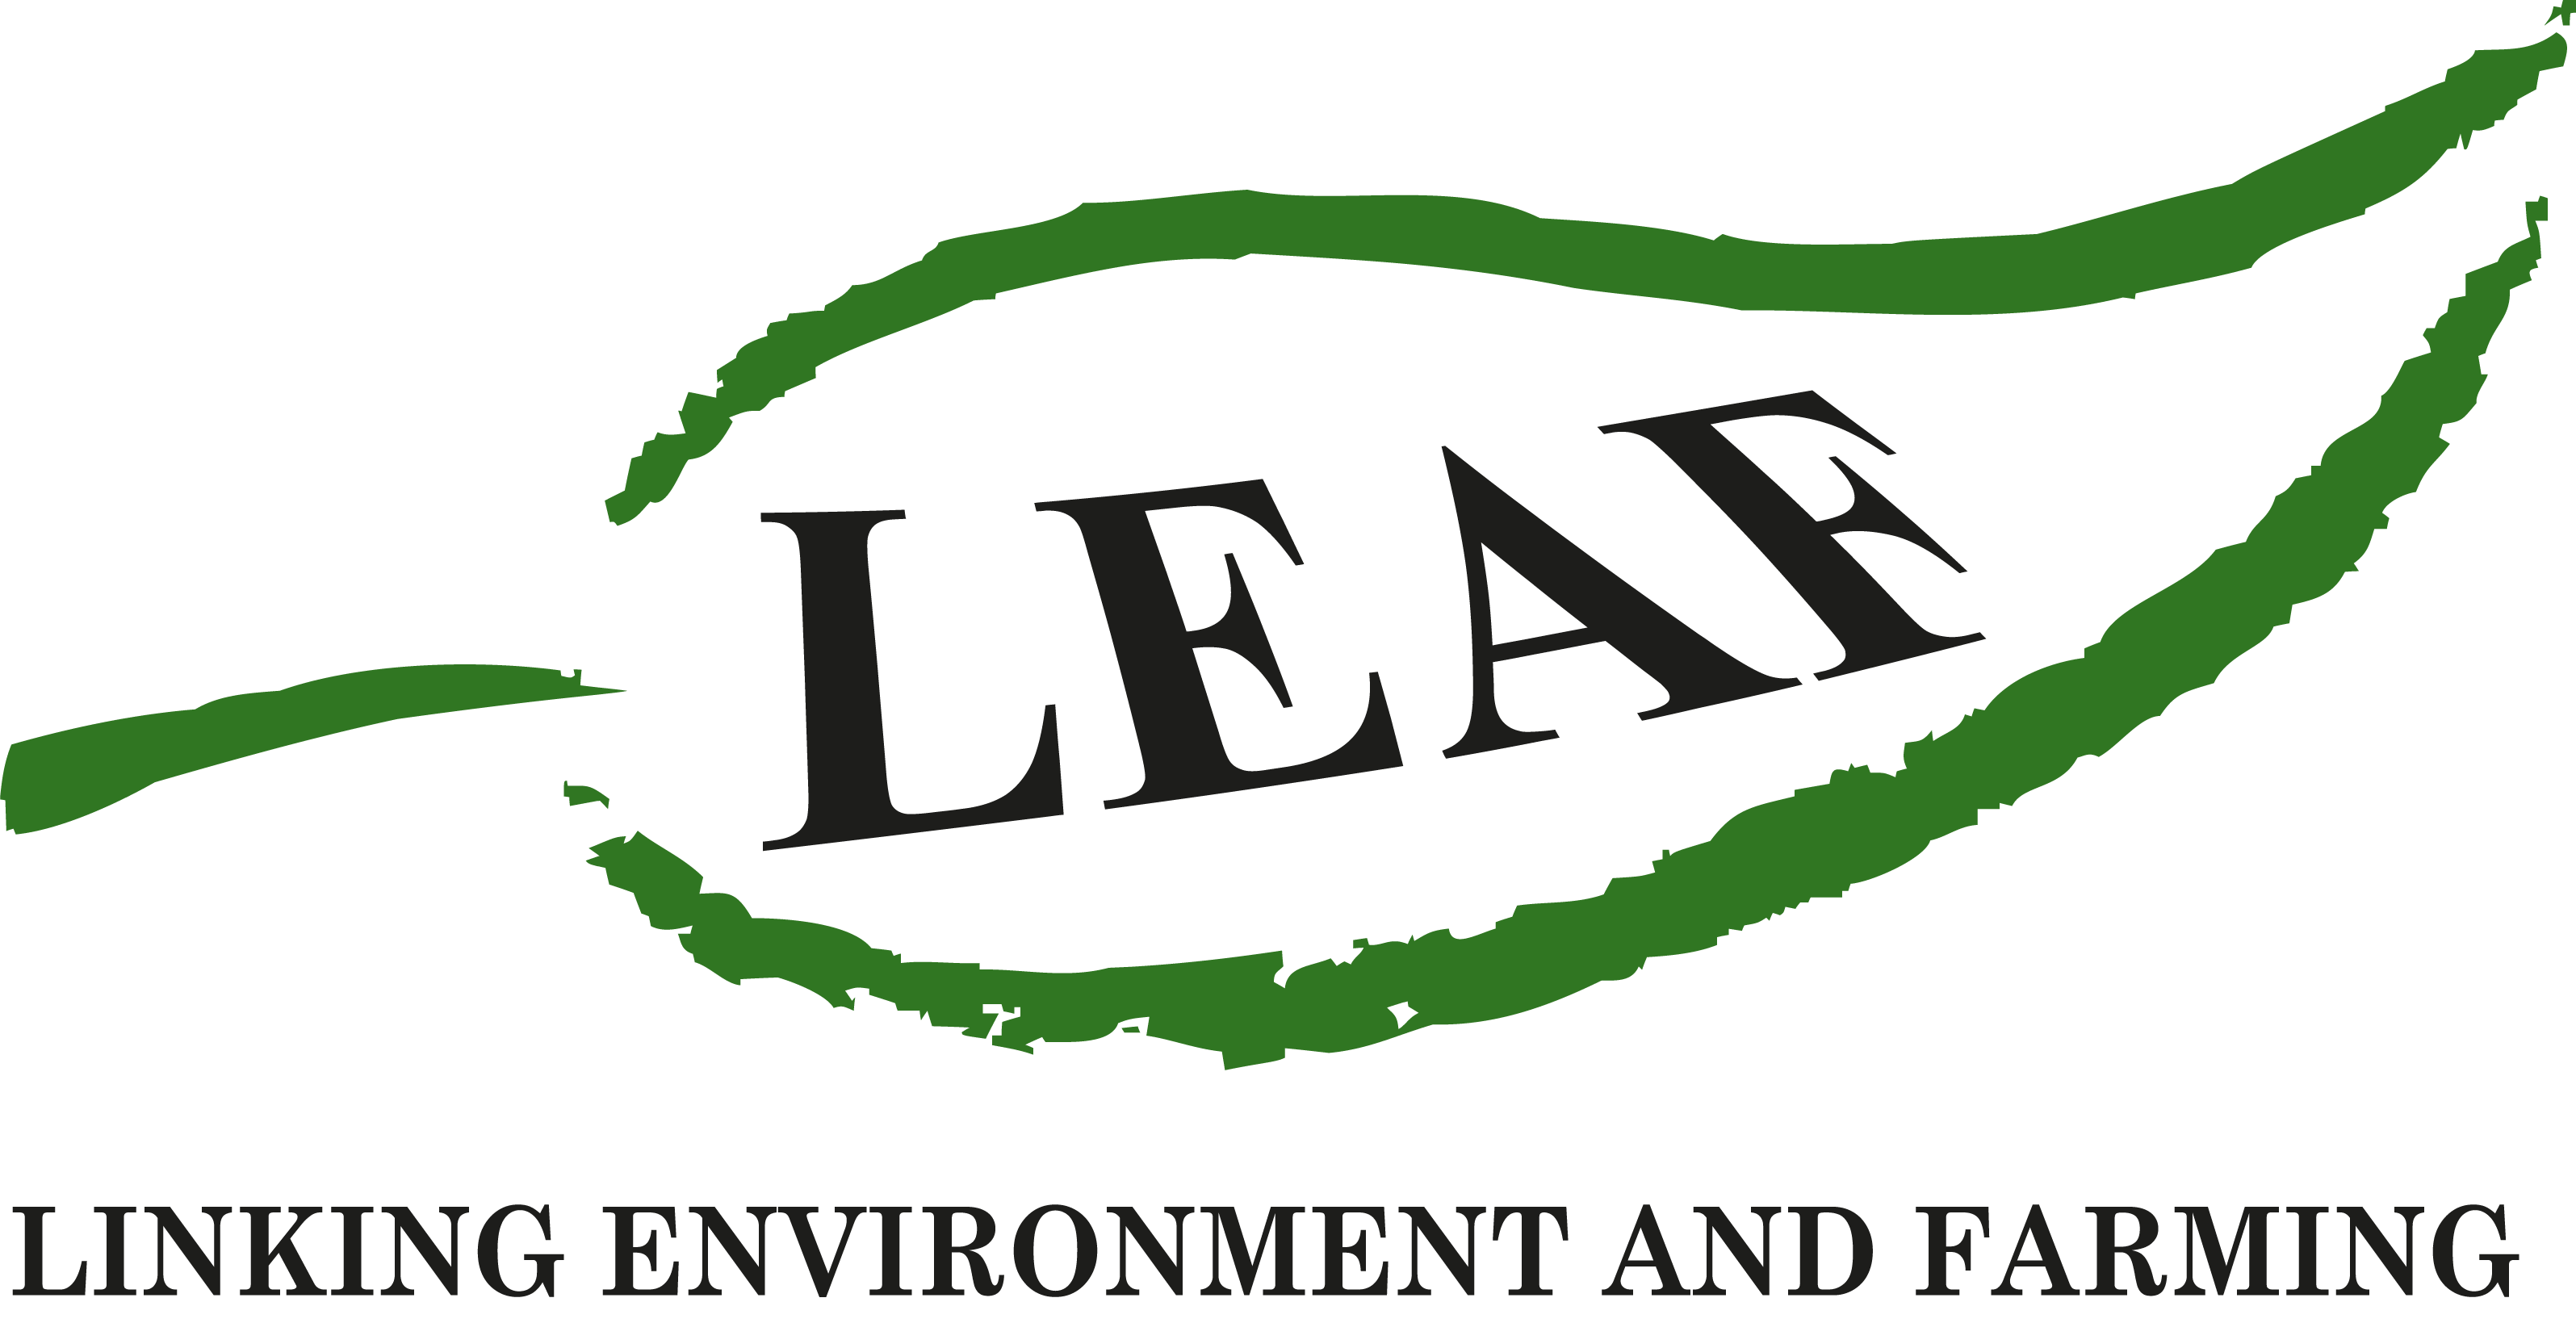 Leaf certified logo